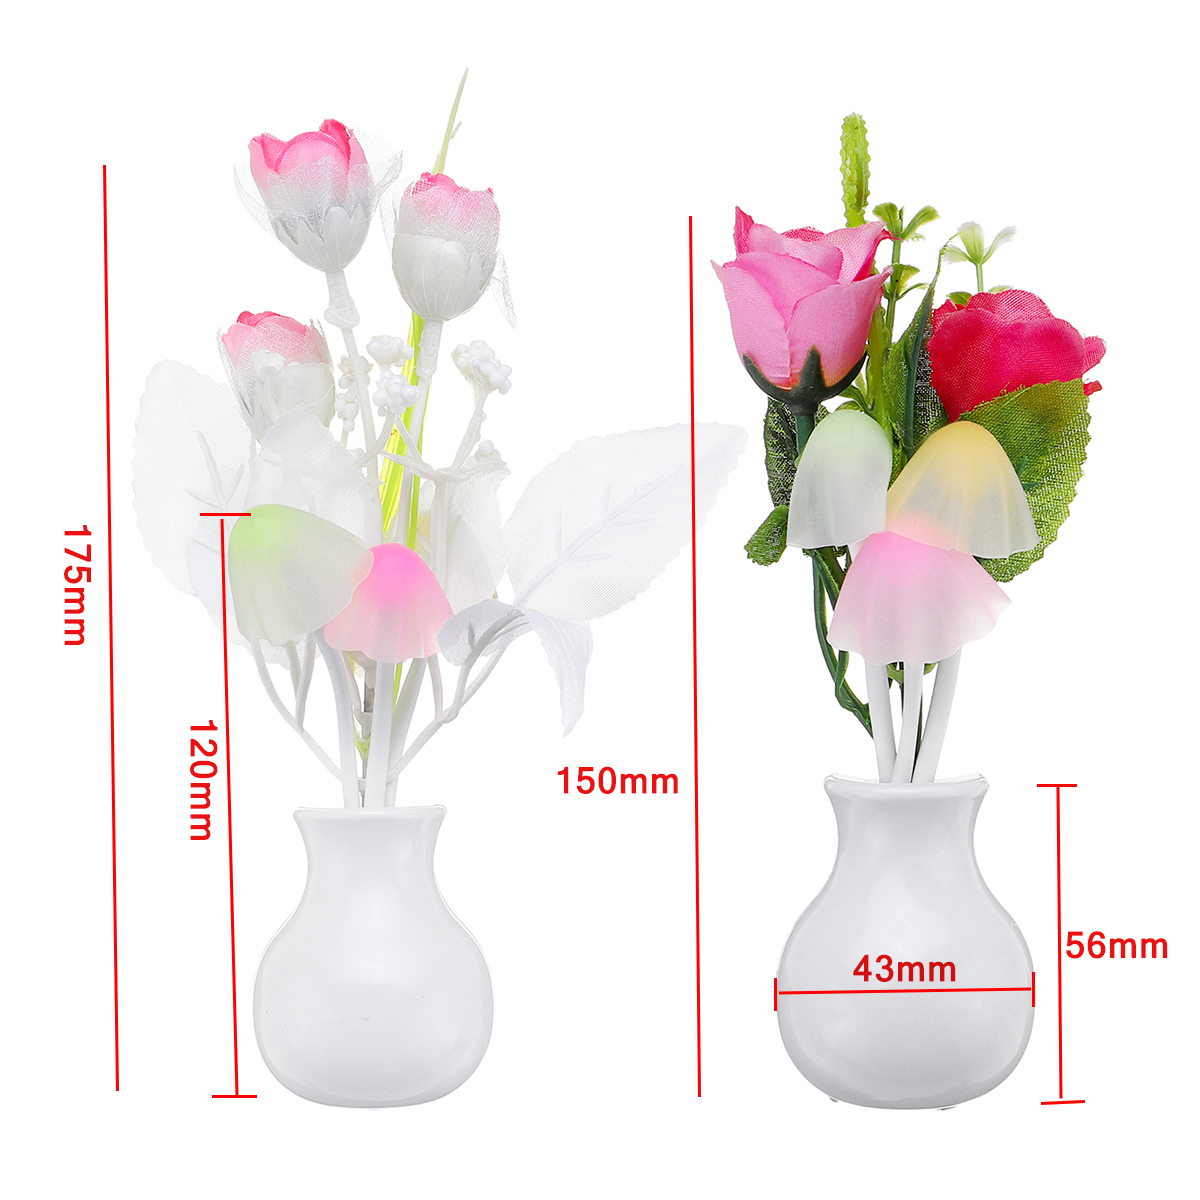 Romantic-Flower-Mushroom-LED-Night-Light-Sensor-Baby-Bed-Lamp-Decor-US-Plug-1691637-4